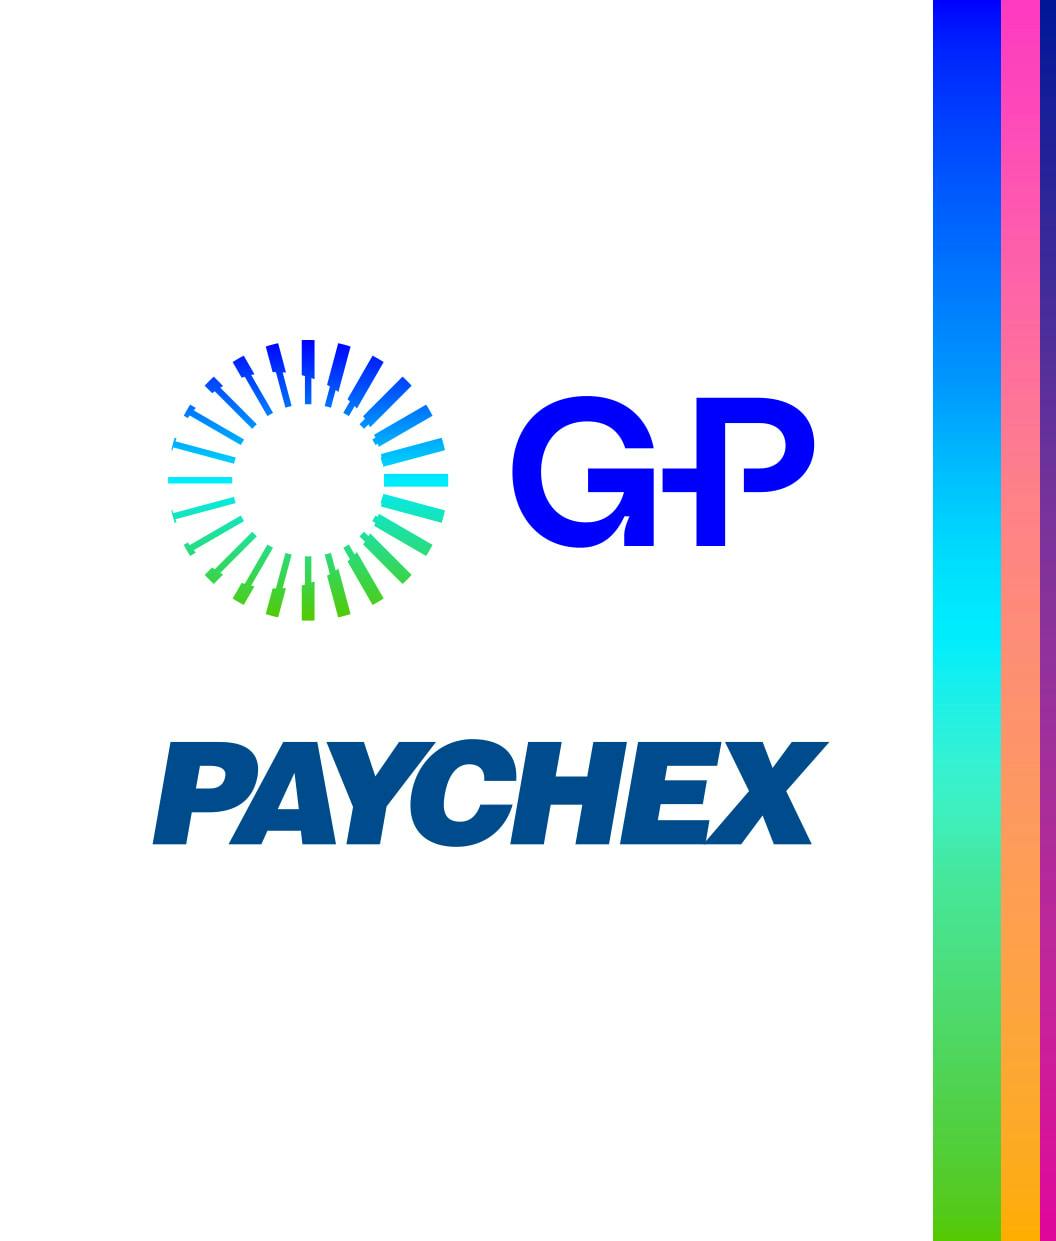 International Hiring Paychex Image 1 (1)